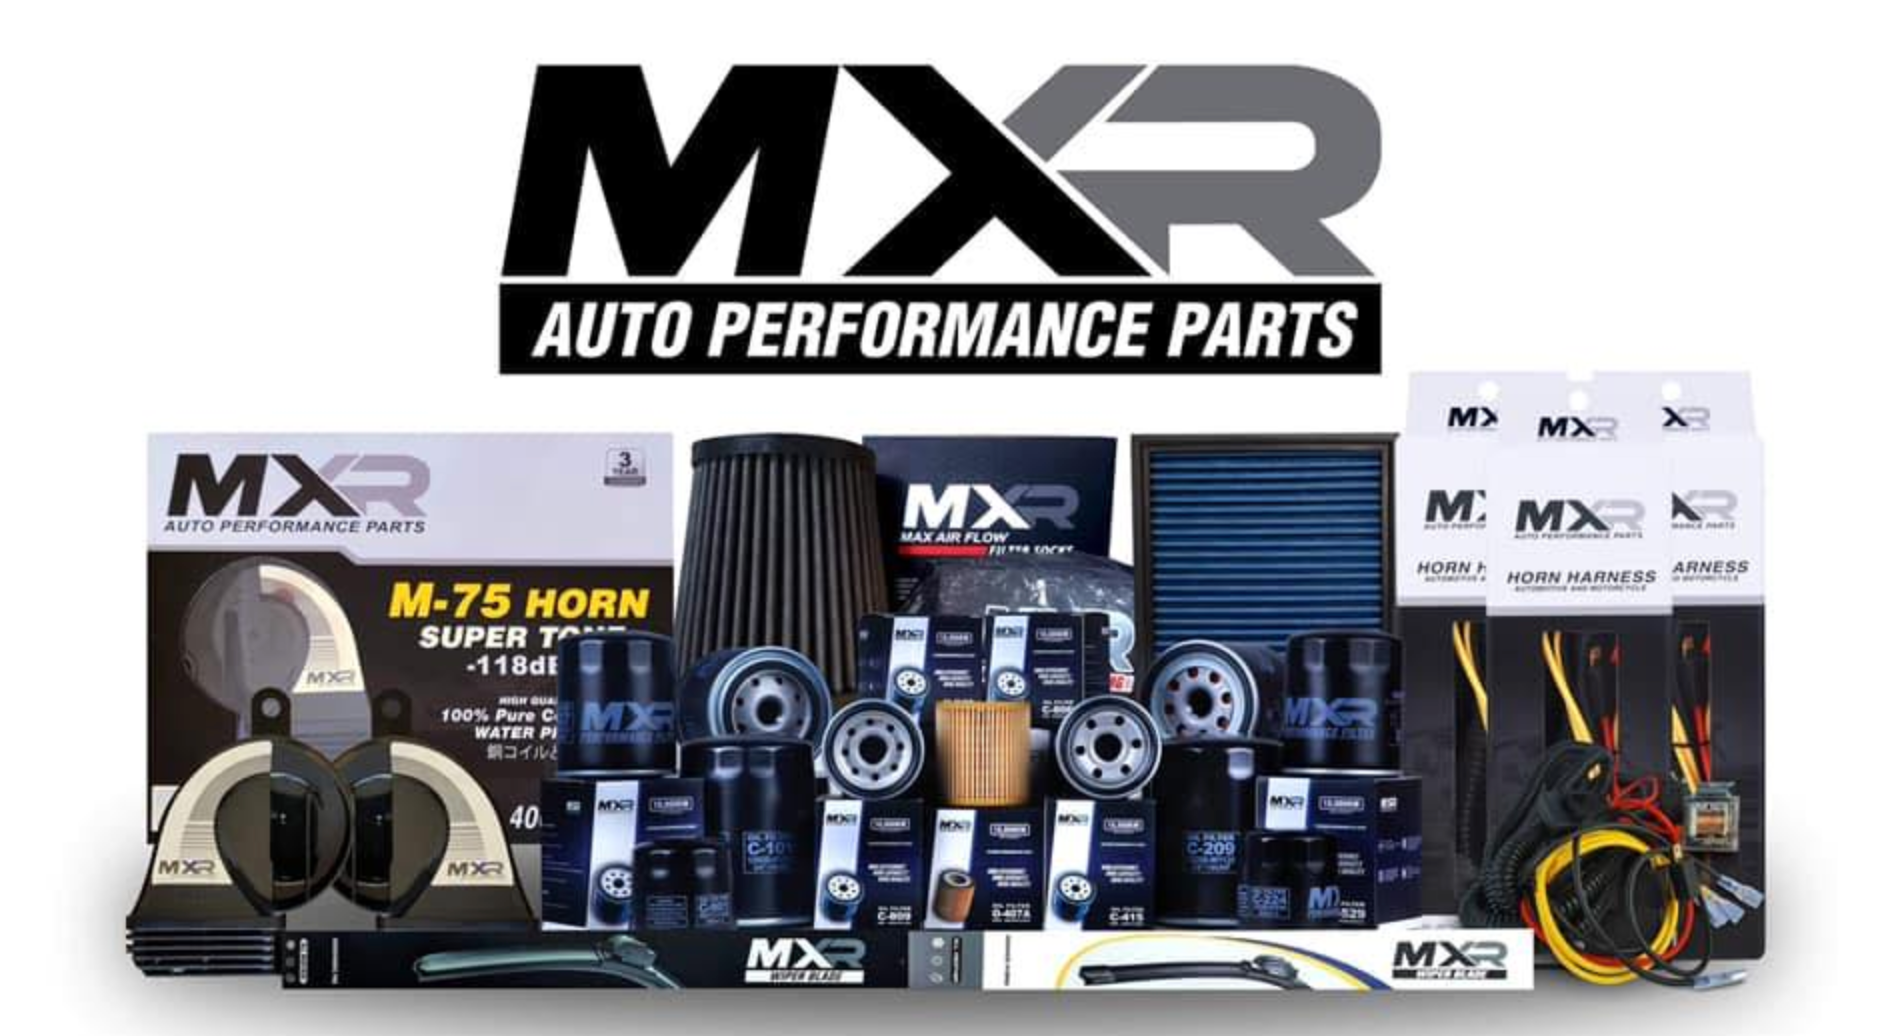 MXR Auto Performance Parts